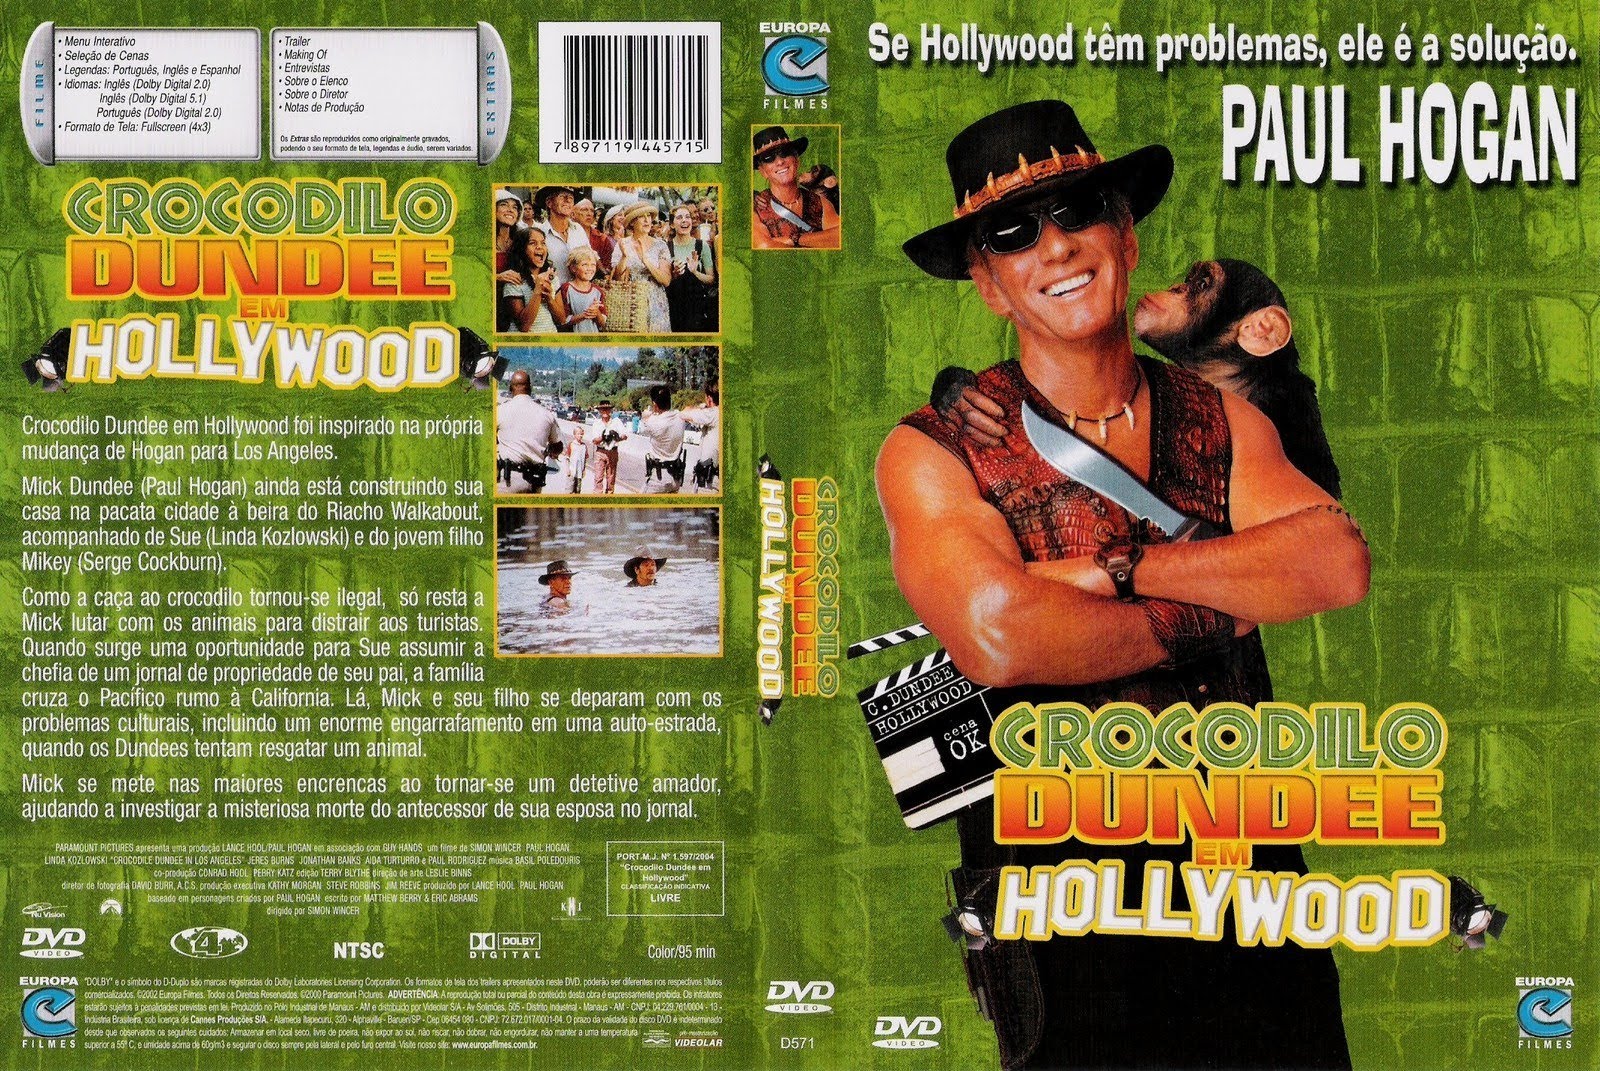 Крокодил данди 2 3. Крокодил Данди (1986) DVD Cover. Крокодил Данди обложка диска. Крокодил Данди в Голливуде. Крокодил Данди DVD.